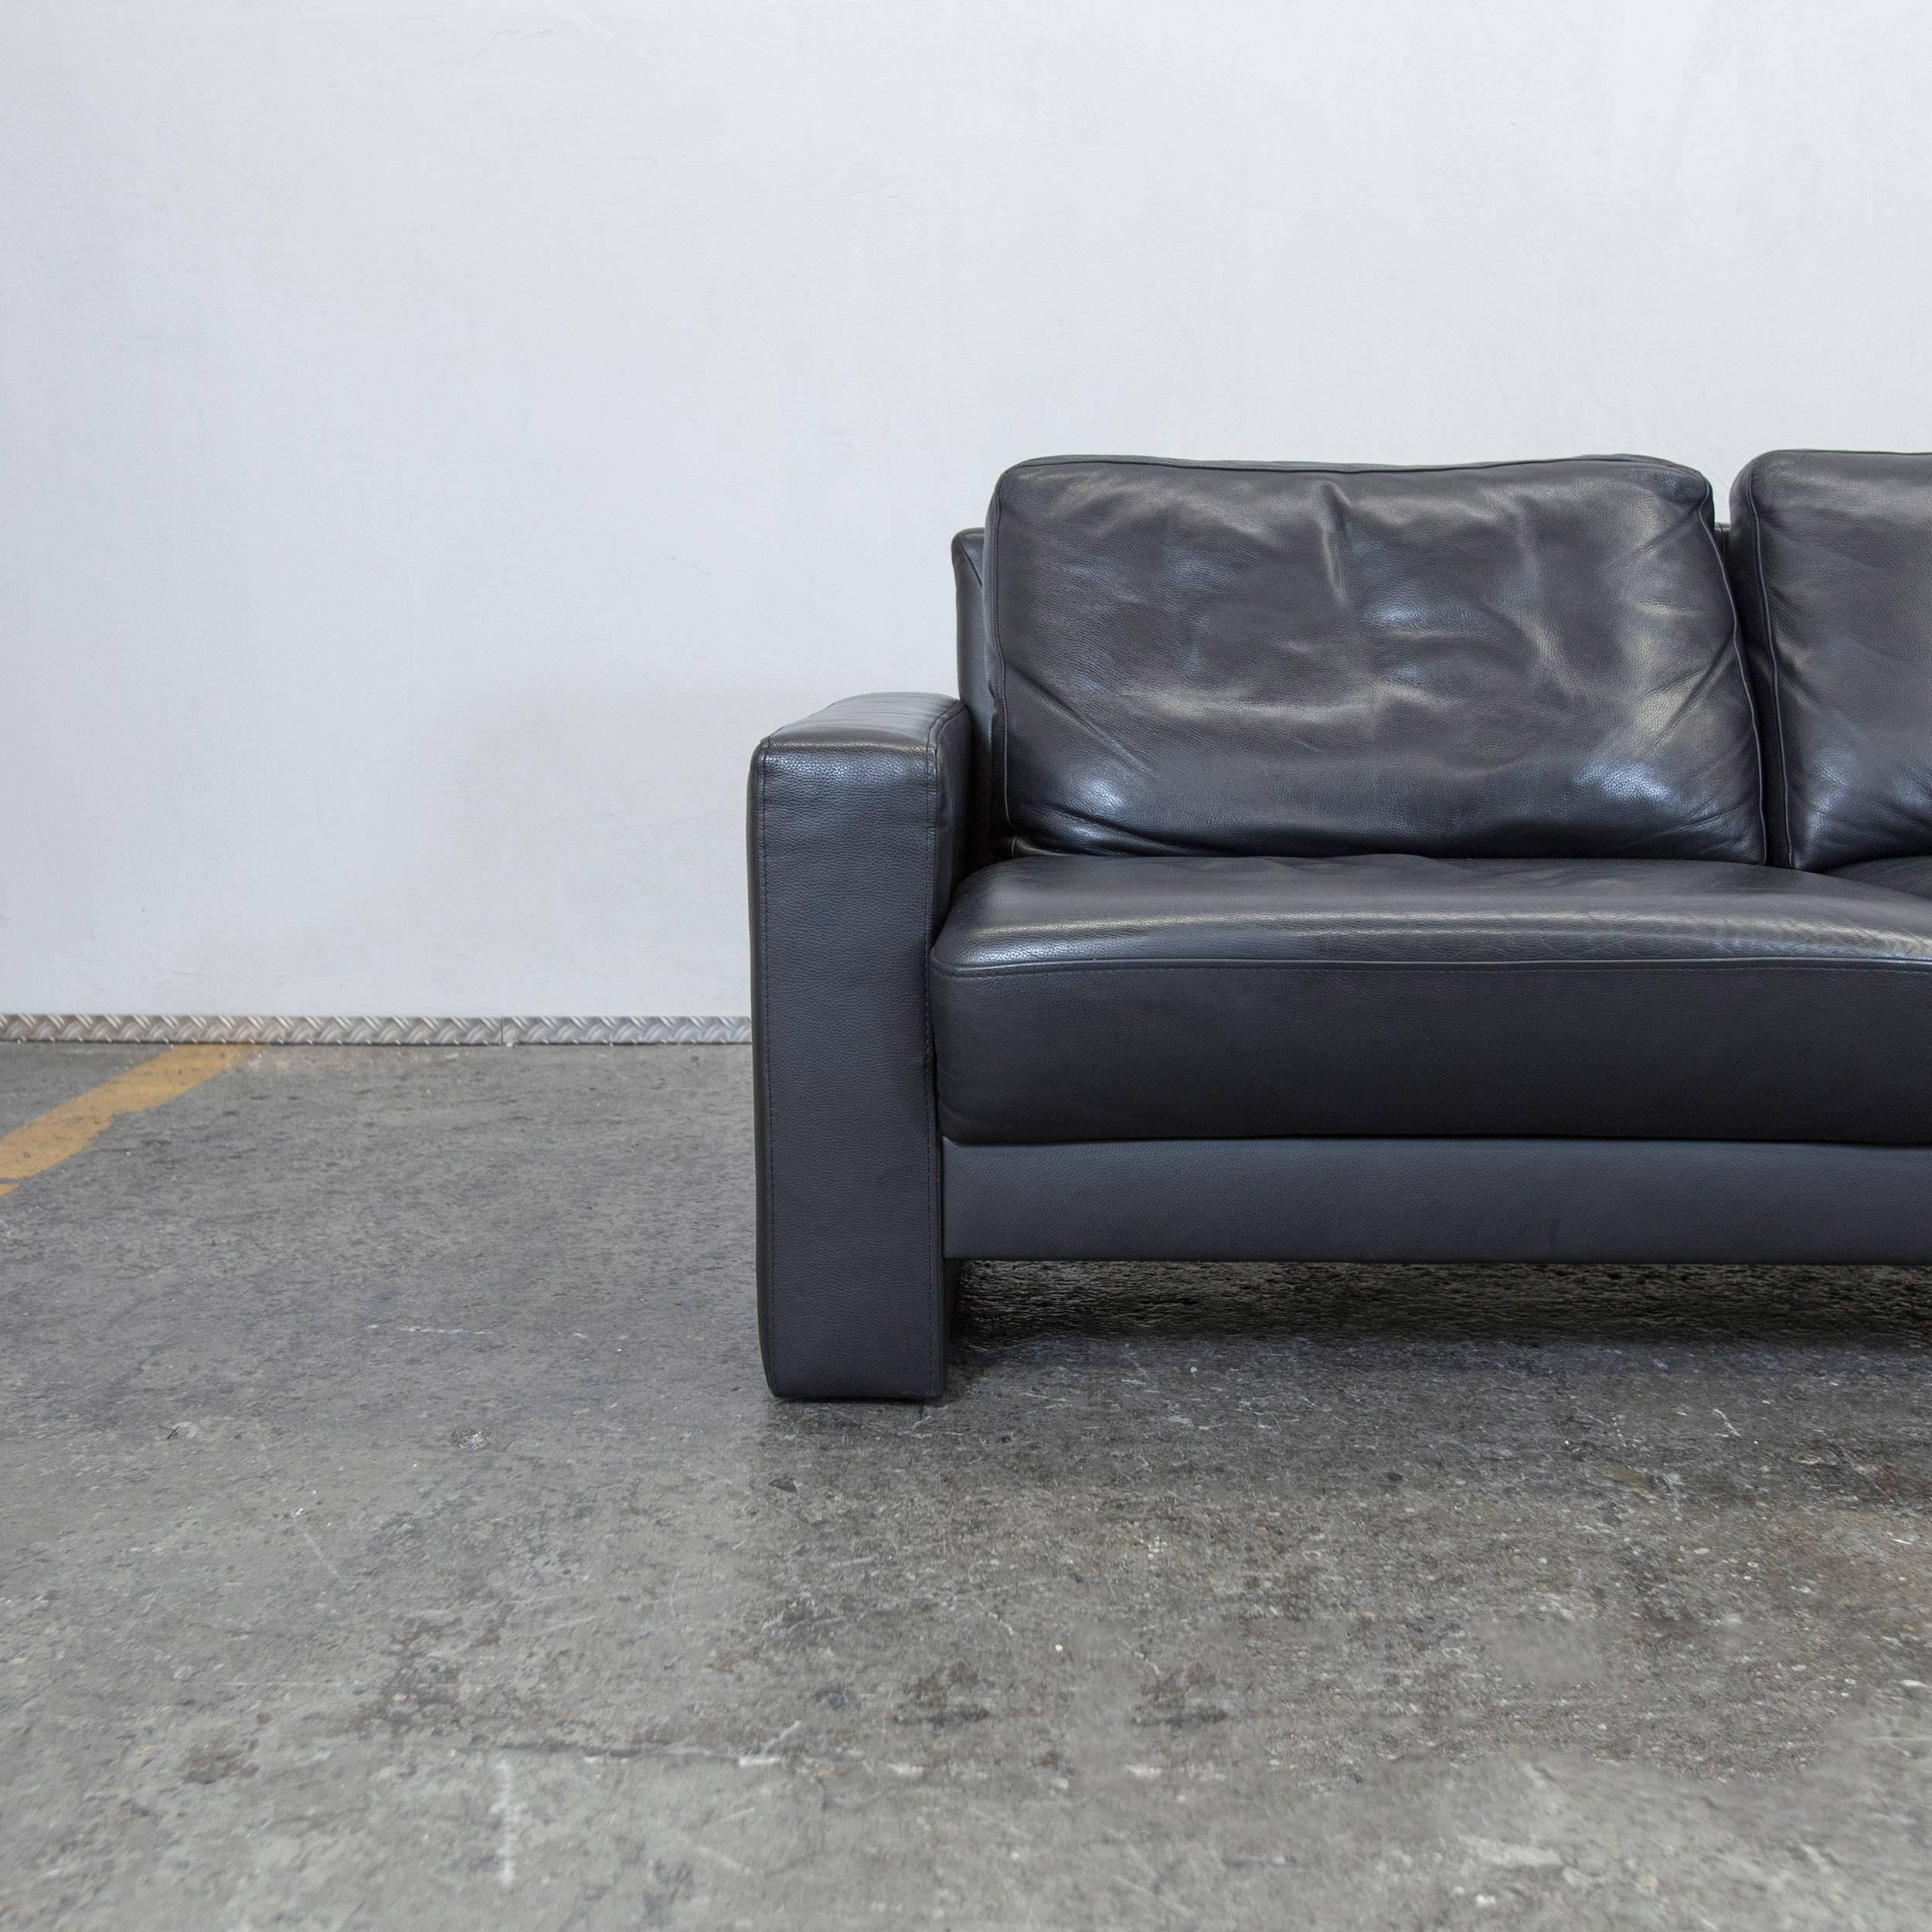 Black colored original Külkens & Sohn designer leather sofa in a minimalistic and modern design, made for pure comfort.